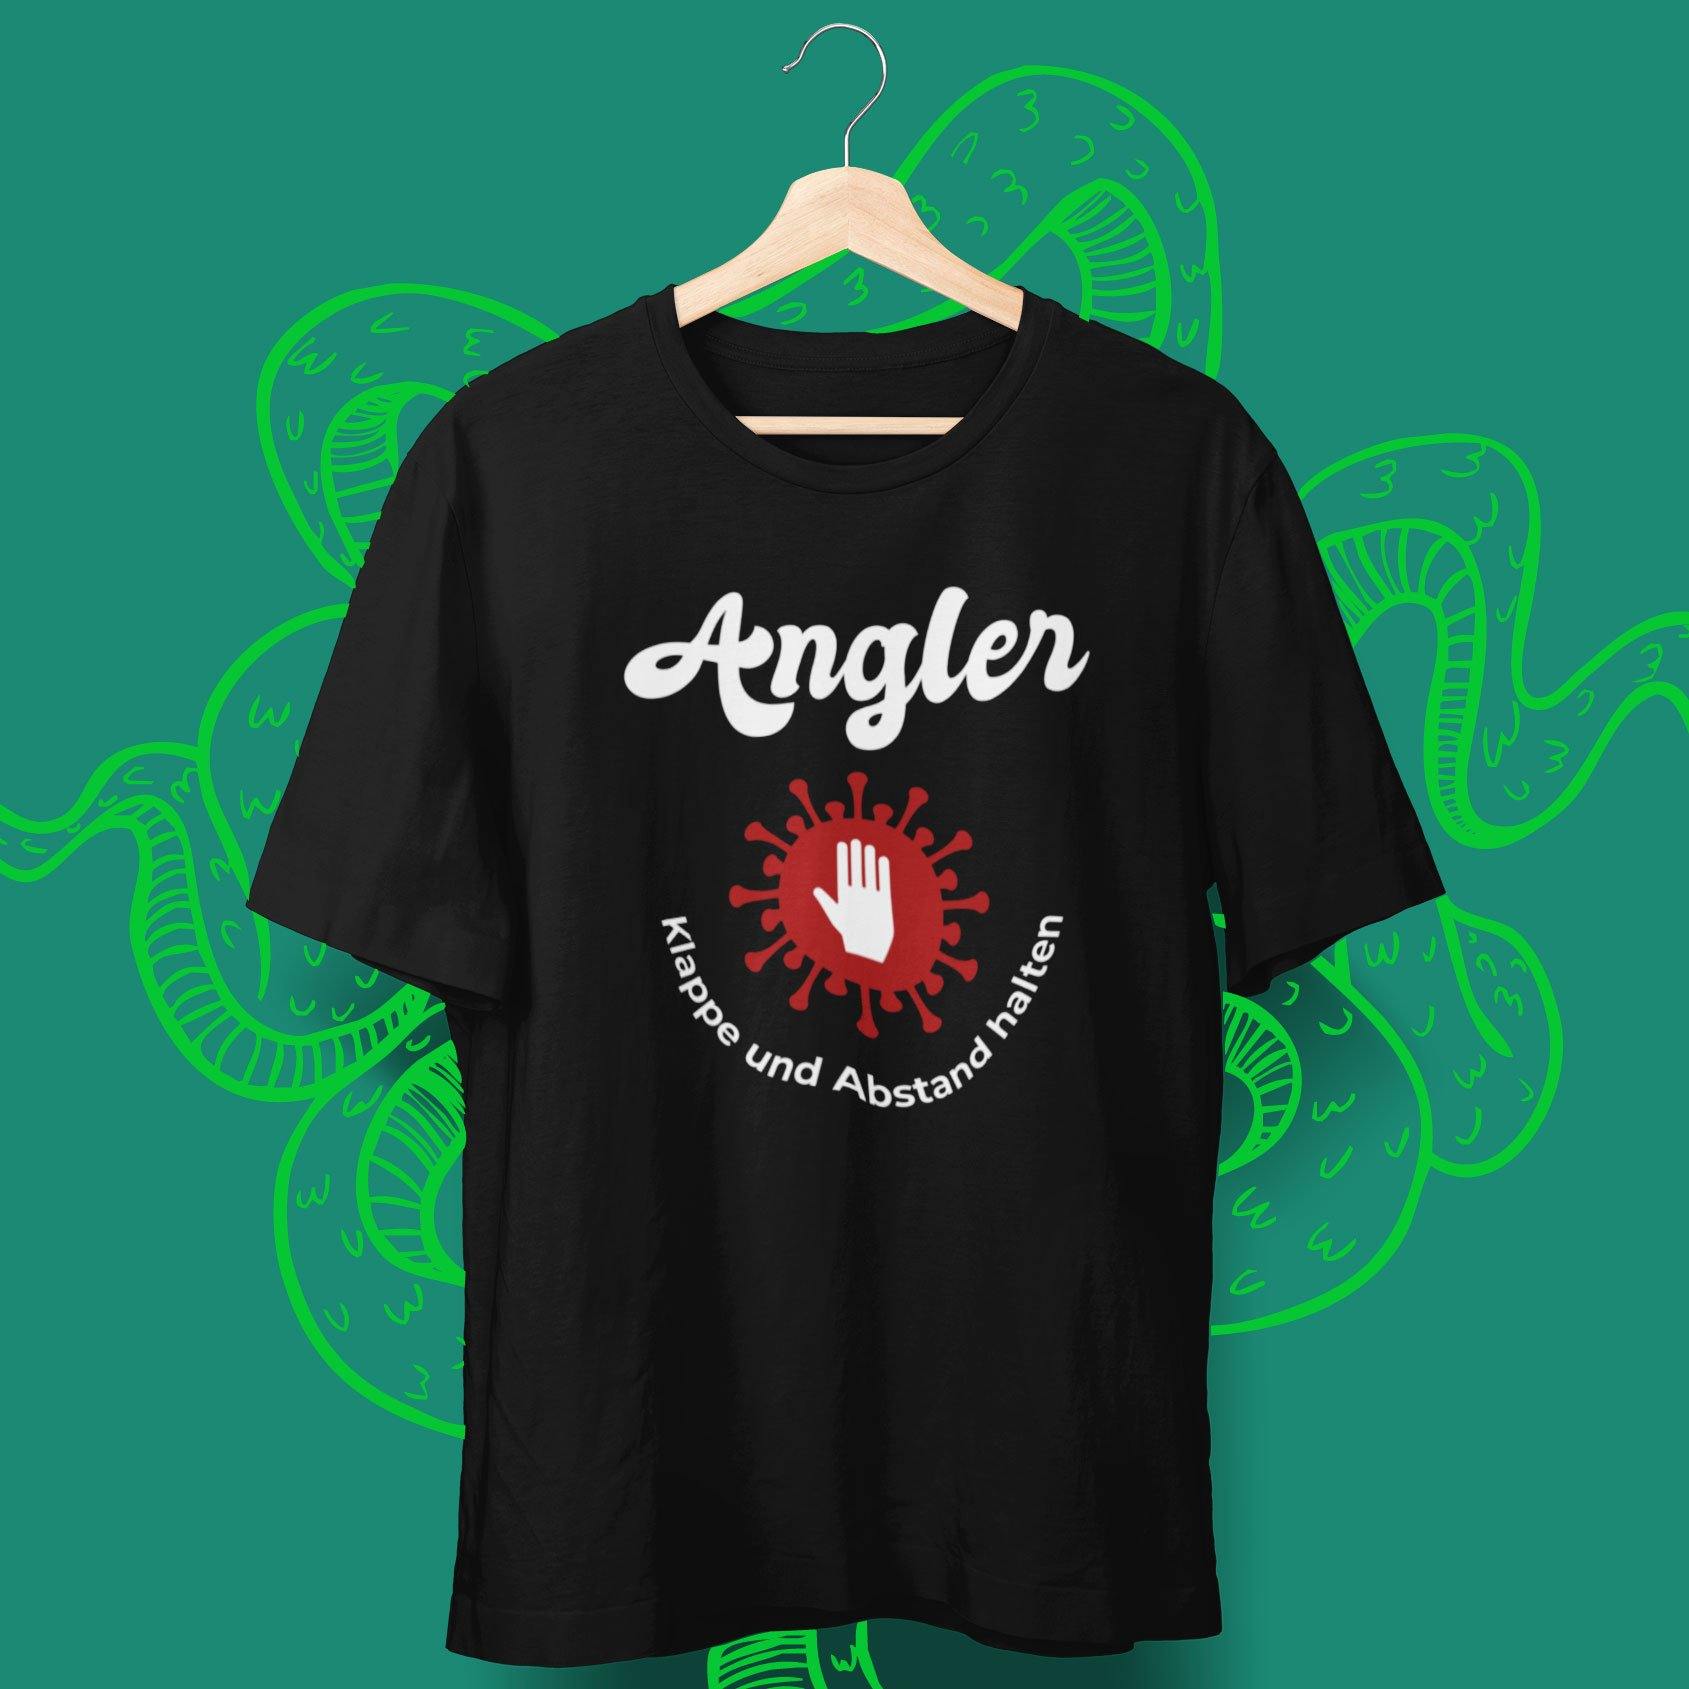 Angler T-Shirt "Klappe und Abstand halten" - aqua-wave.de